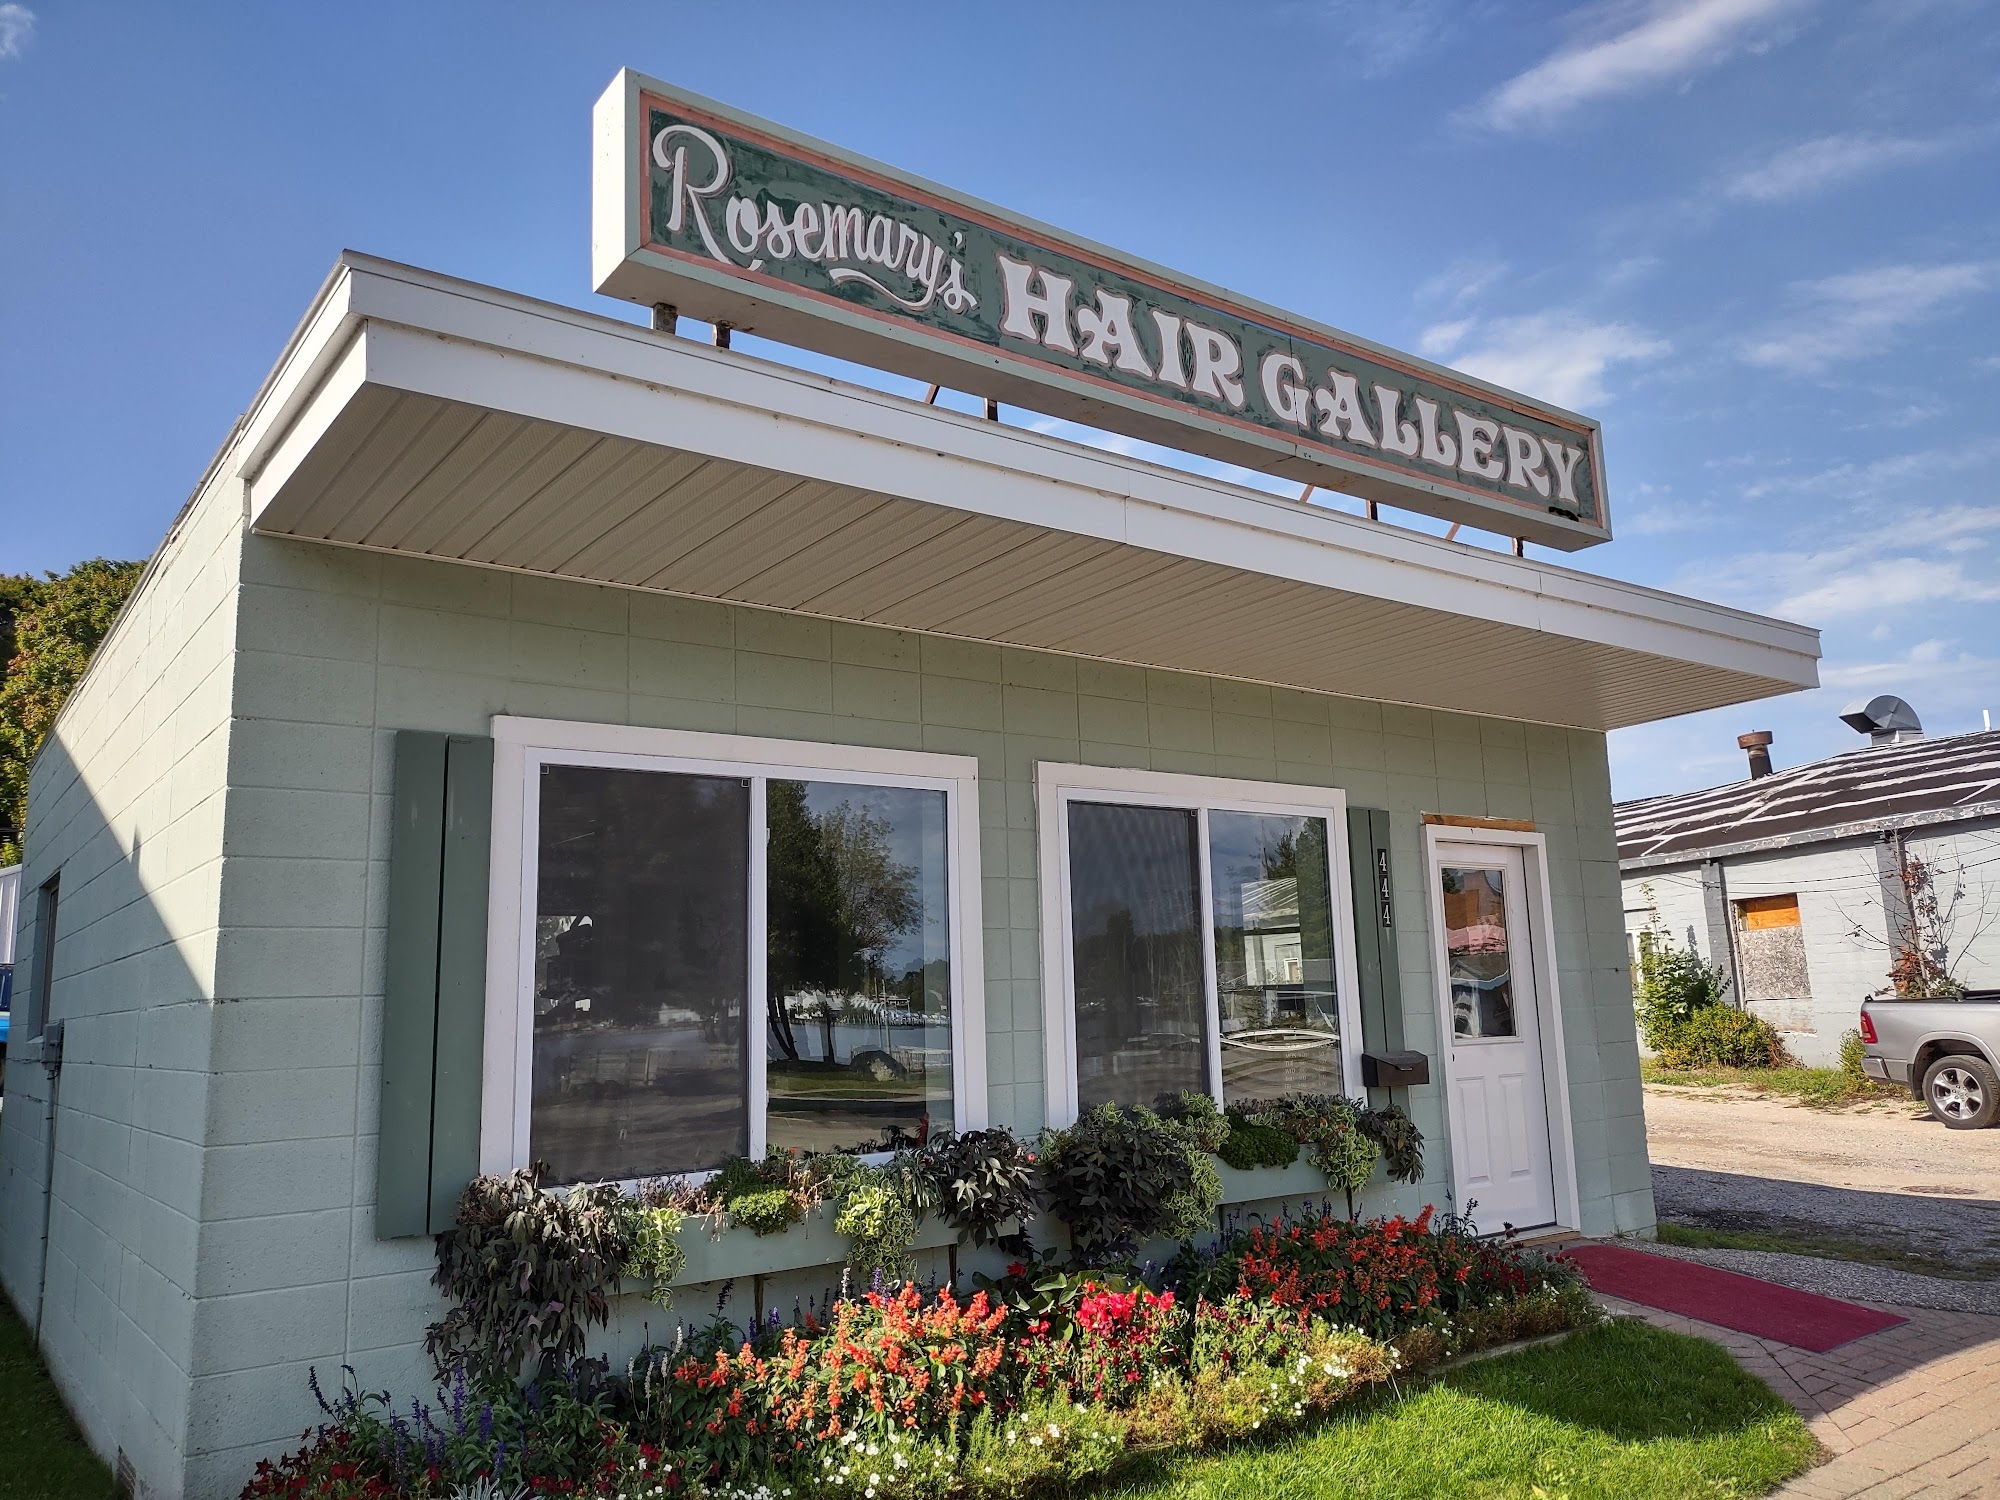 Rosemary's Hair Gallery 444 N State St, St Ignace Michigan 49781